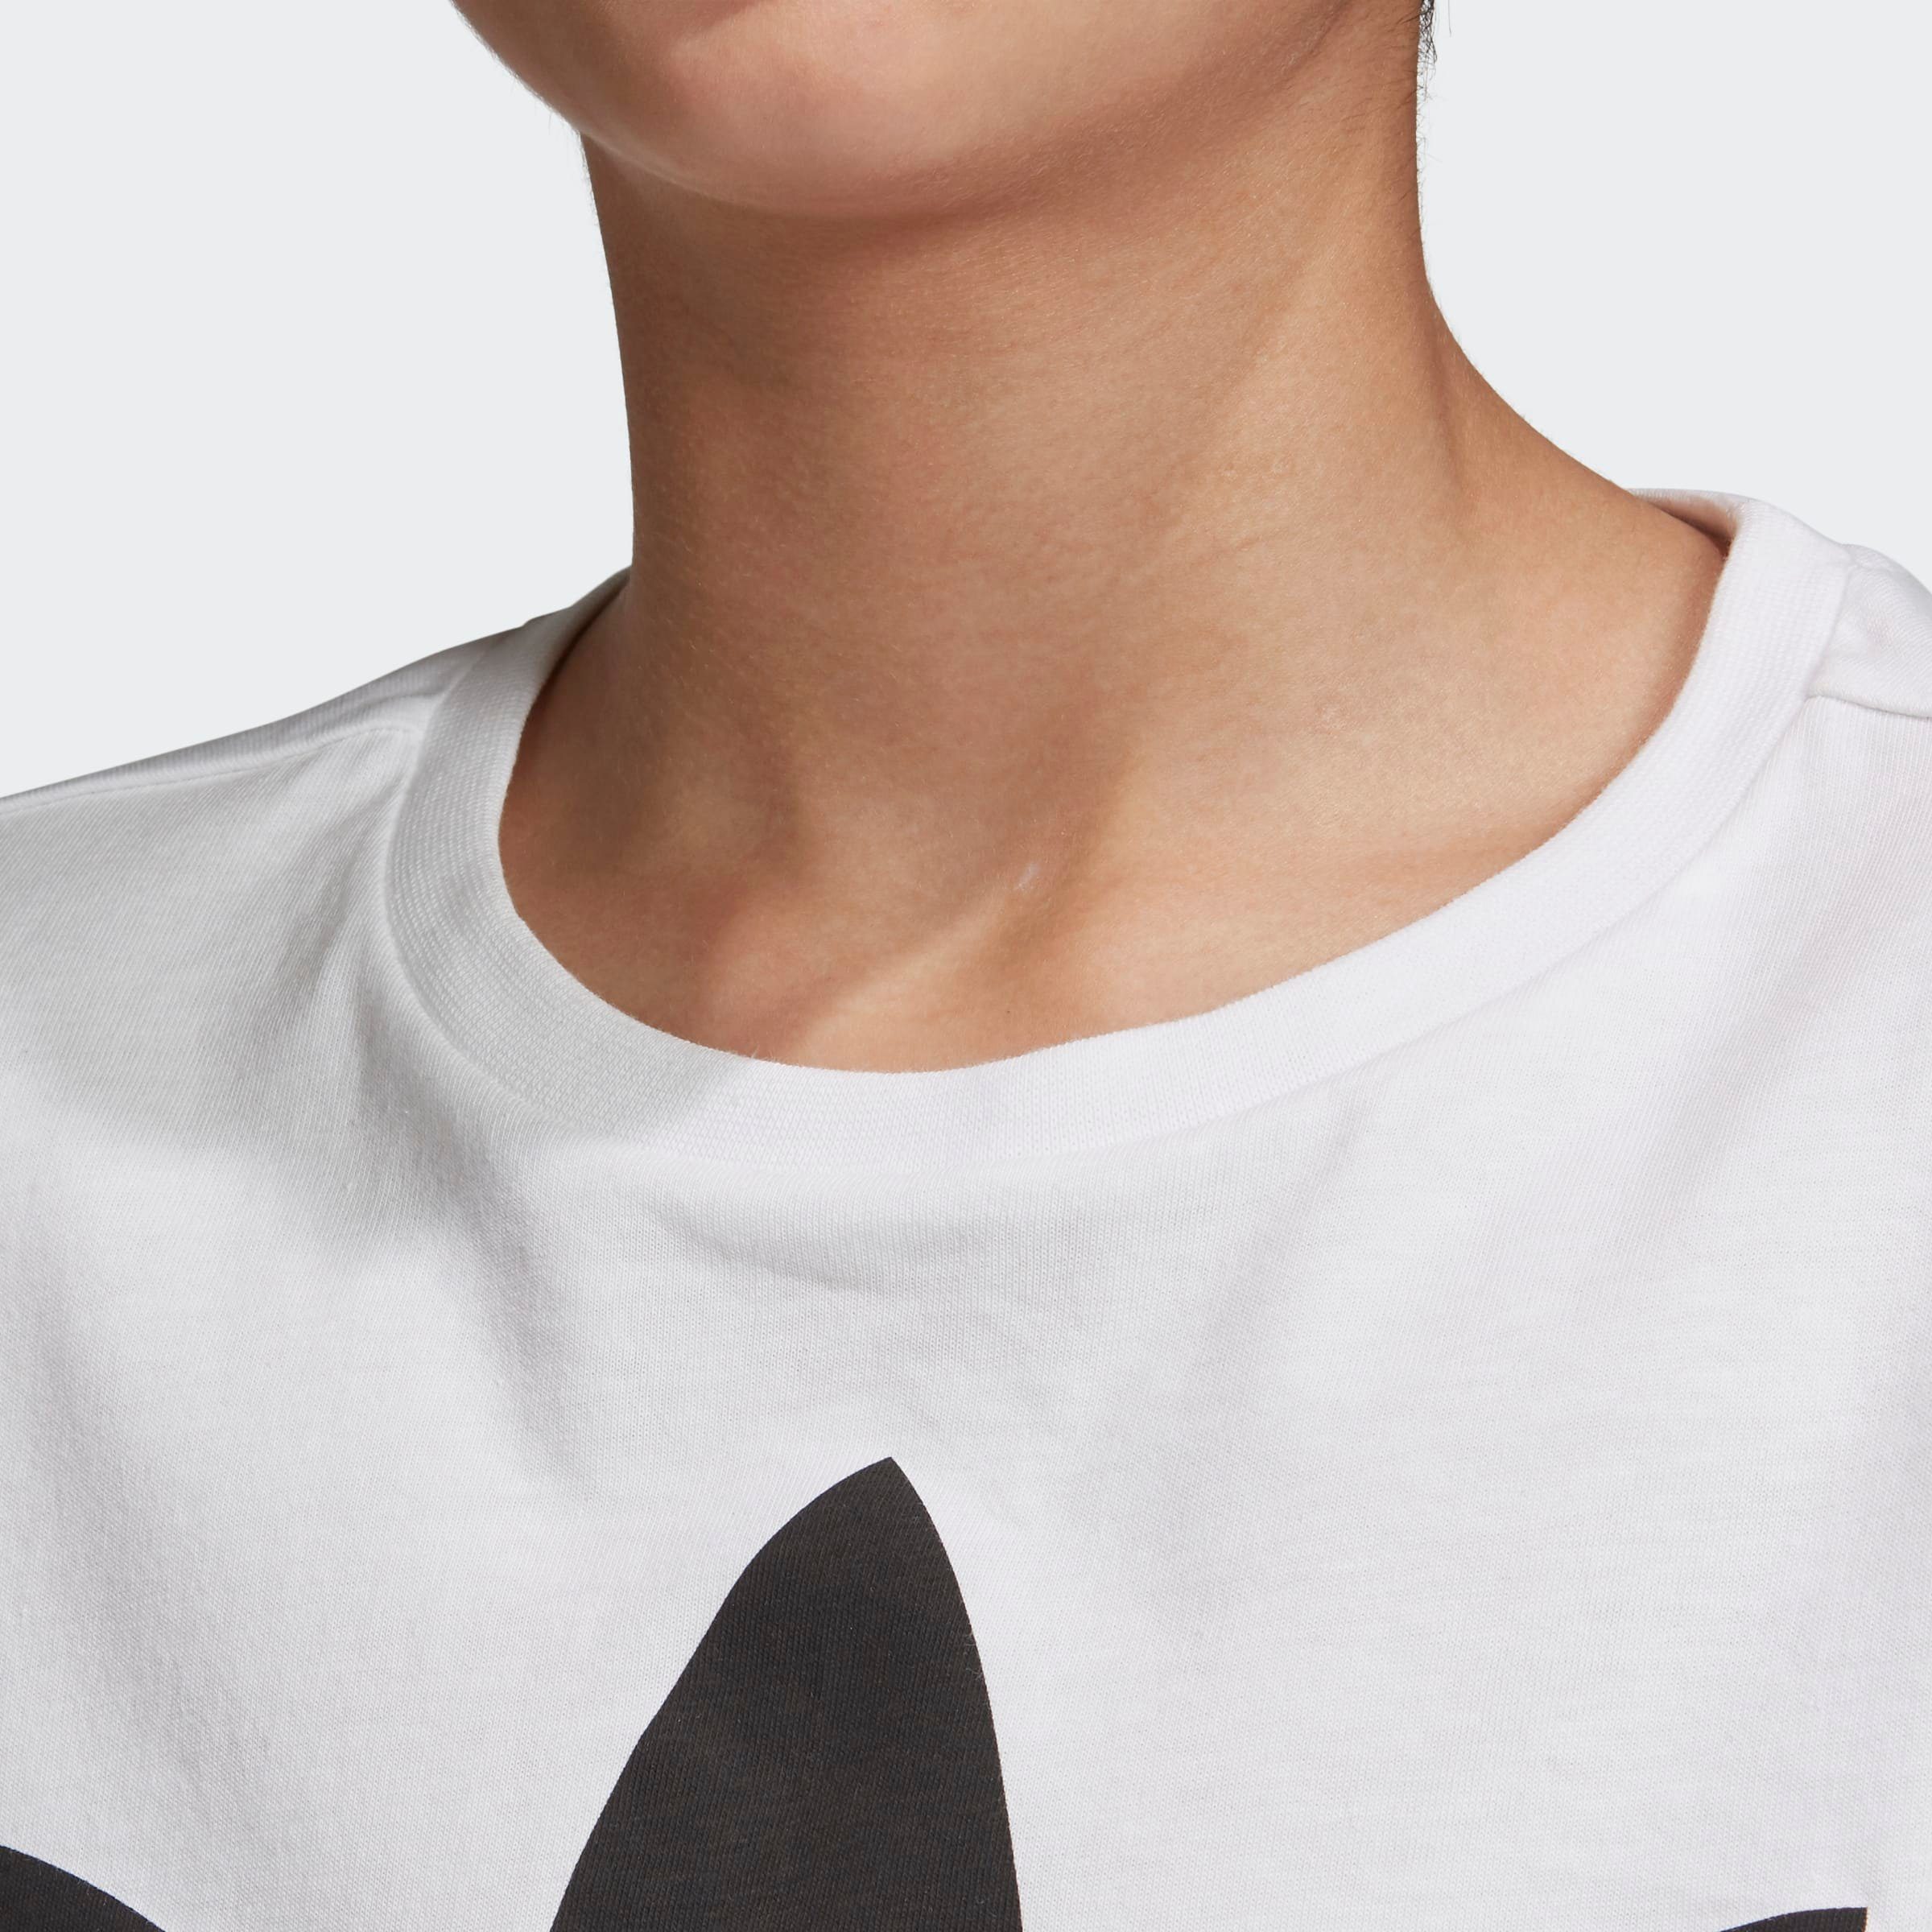 adidas Originals T-Shirt White Black TEE / TREFOIL Unisex